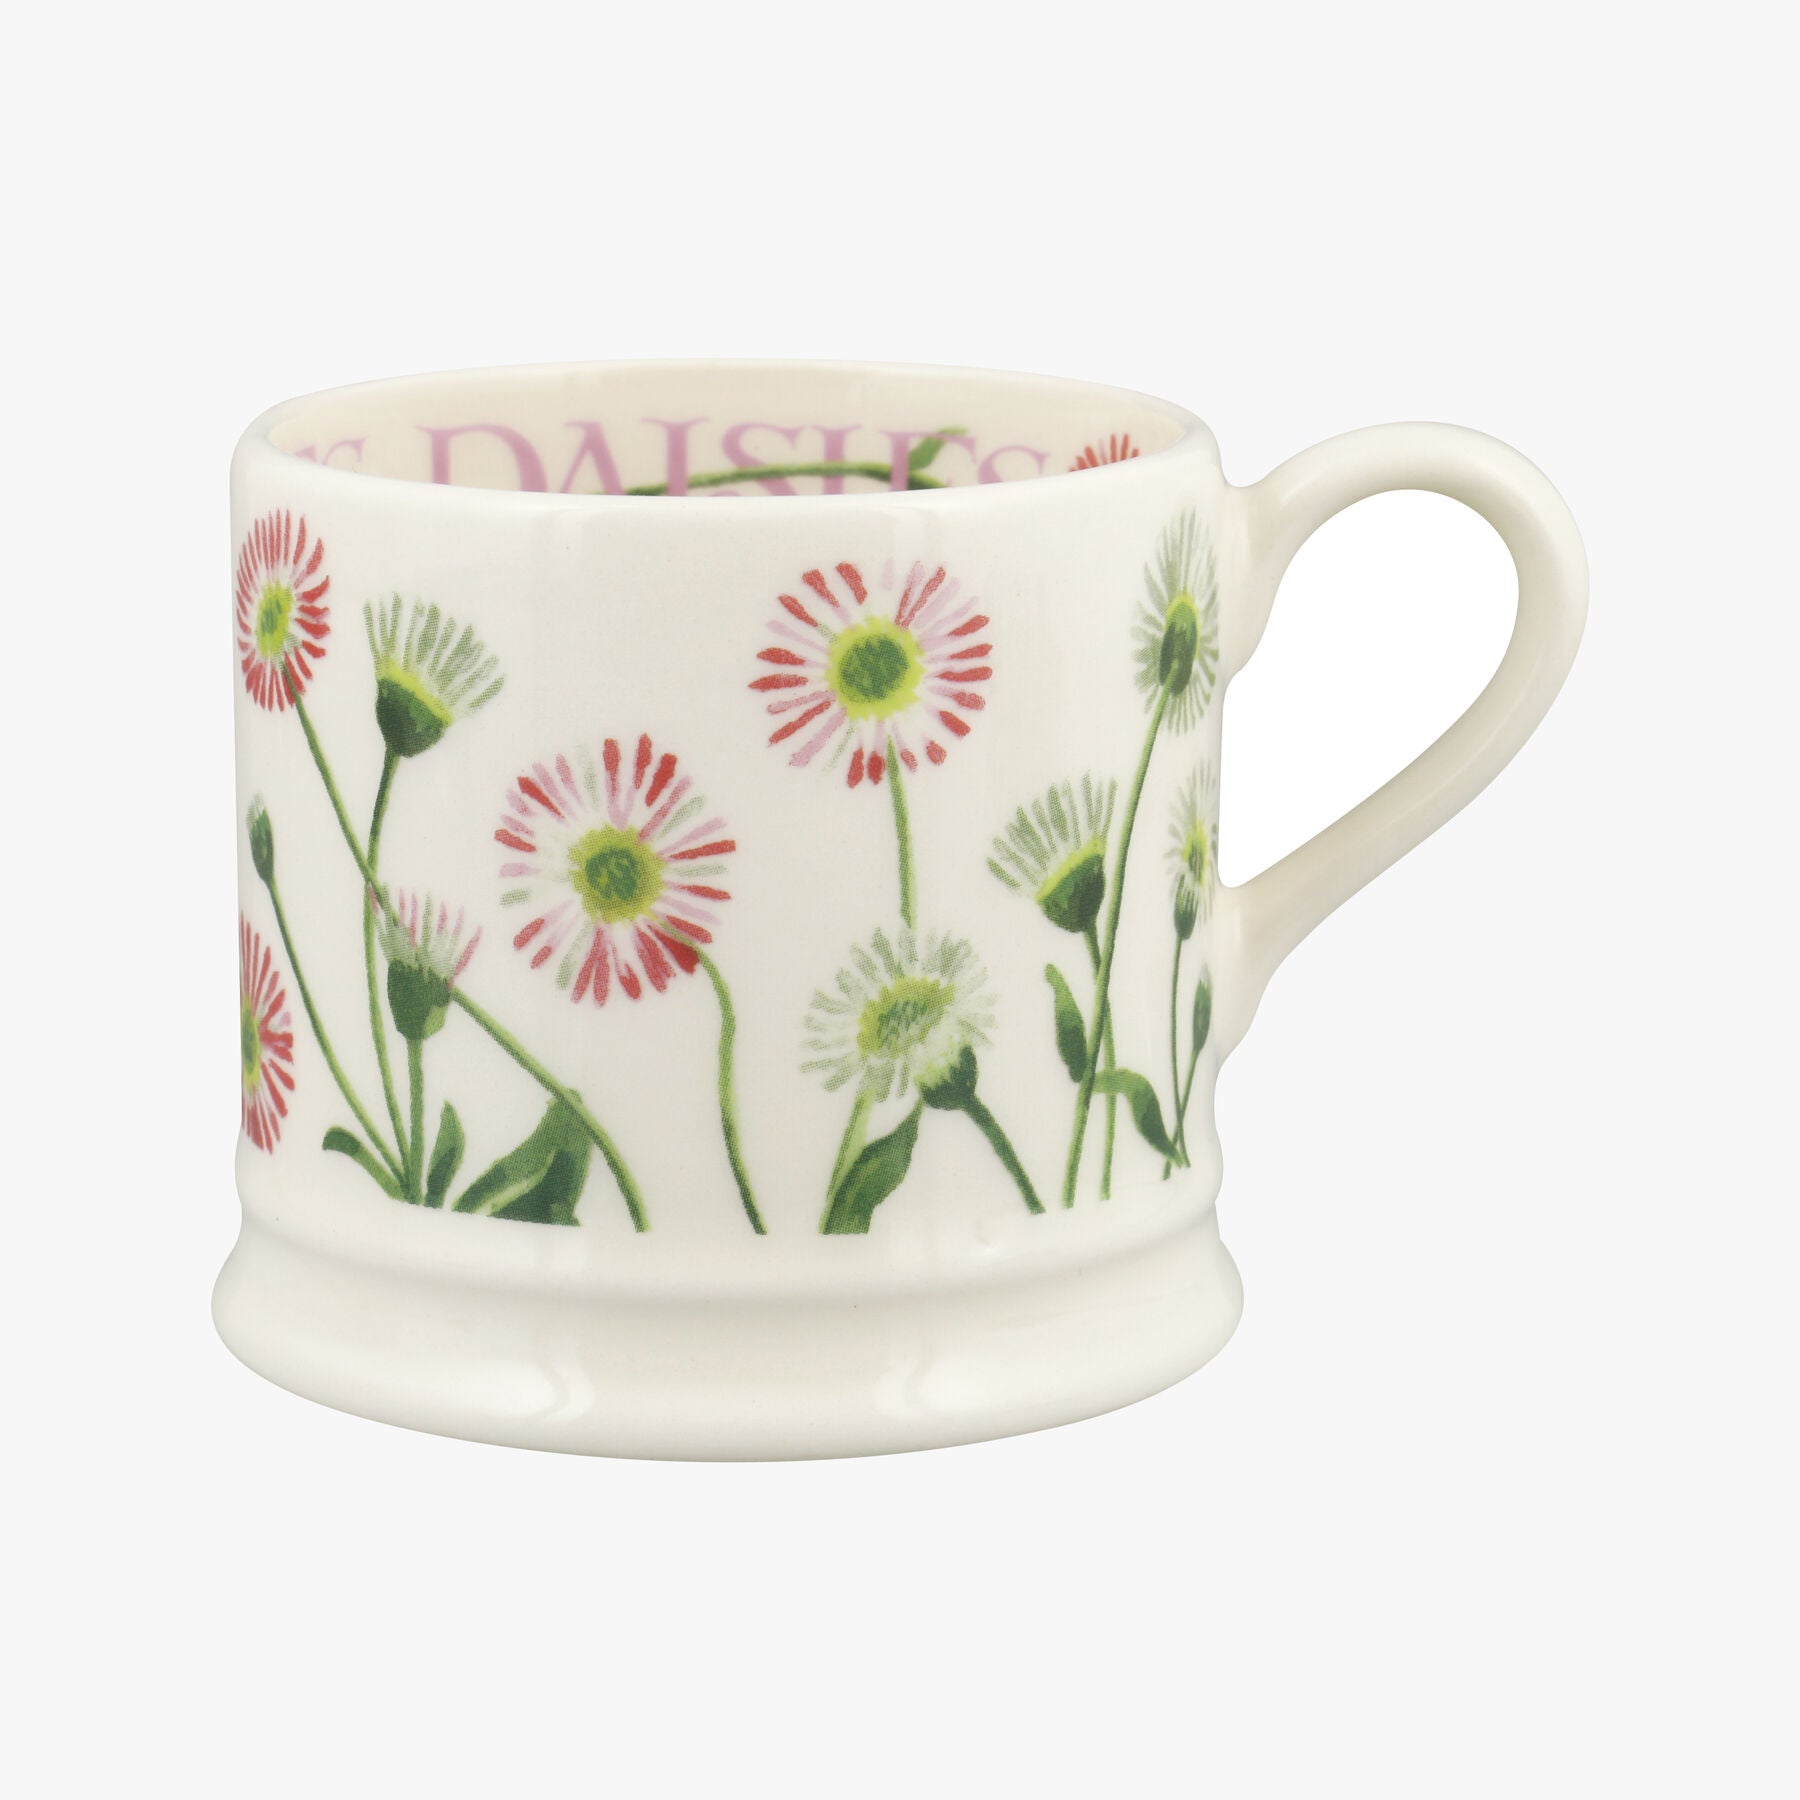 Emma Bridgewater |  Daisies Small Mug - Unique Handmade & Handpainted English Earthenware Tea/Coffee